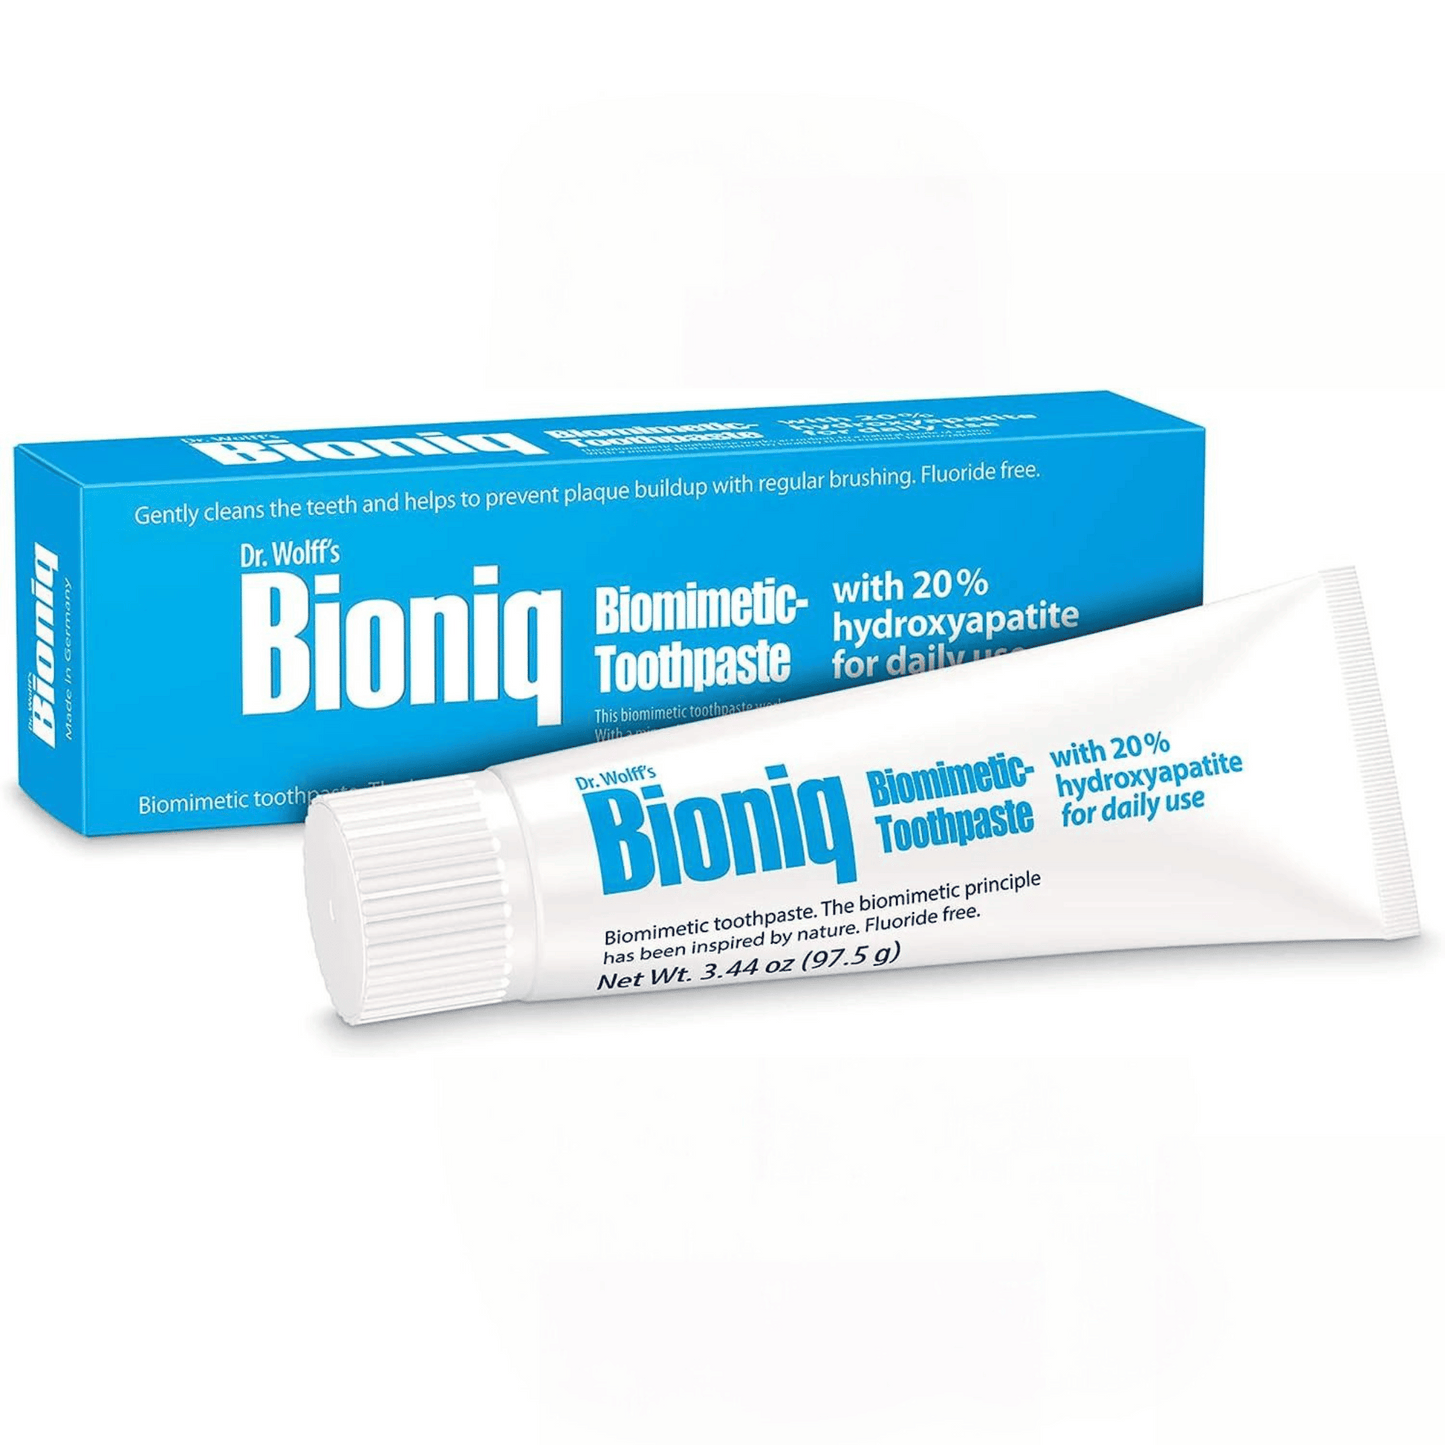 Alternate Image of Biomimetic Toothpaste